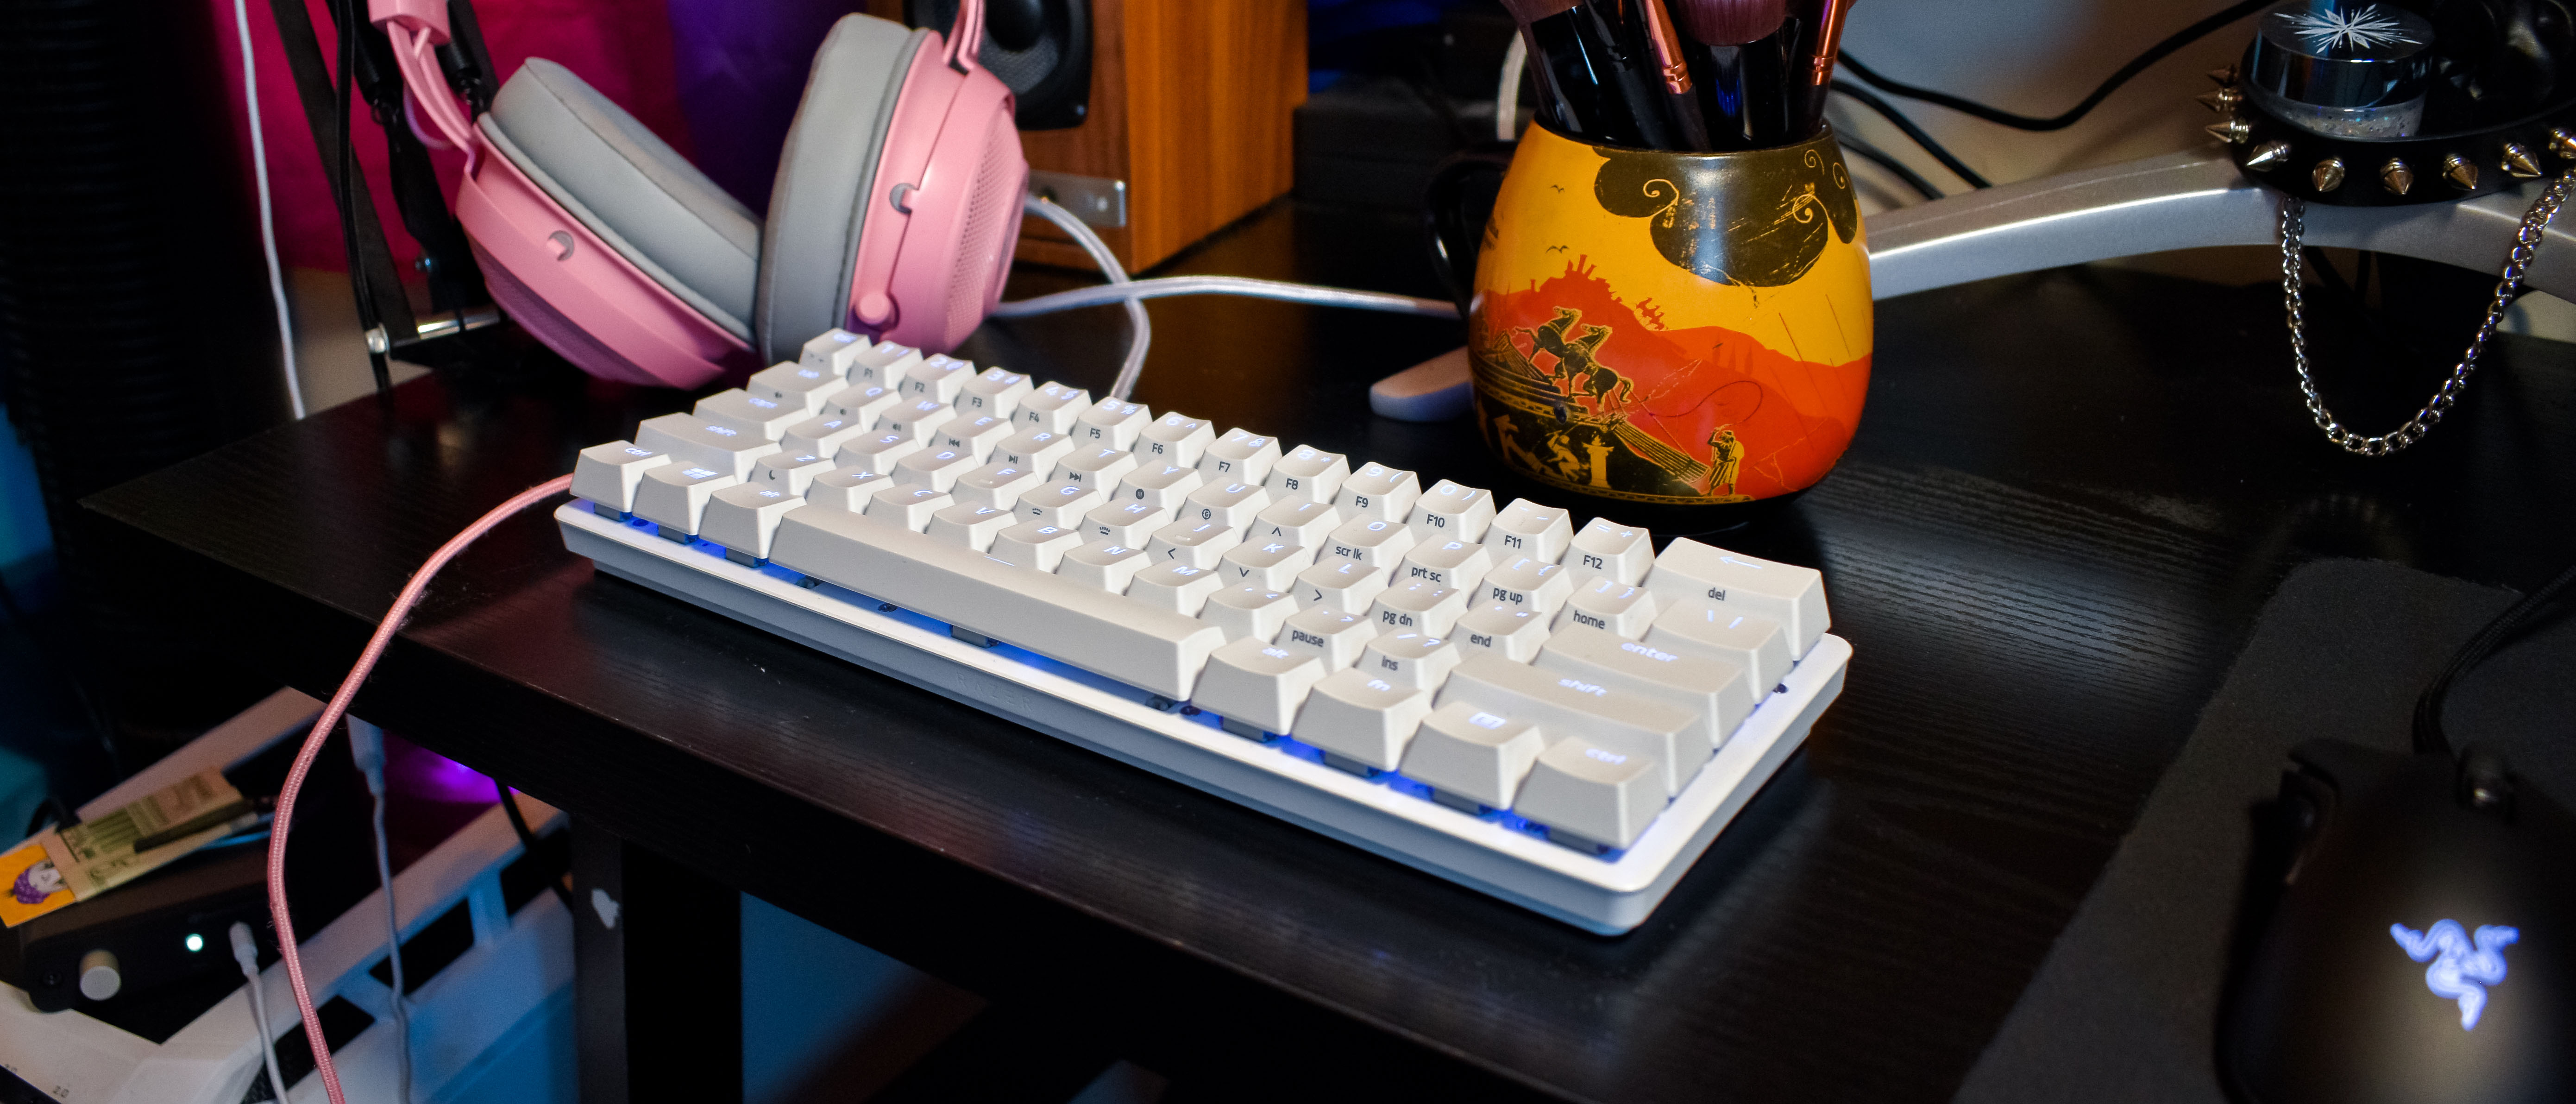 Razer Huntsman Mini (60%) Keyboard Review - They CAN Do Better!